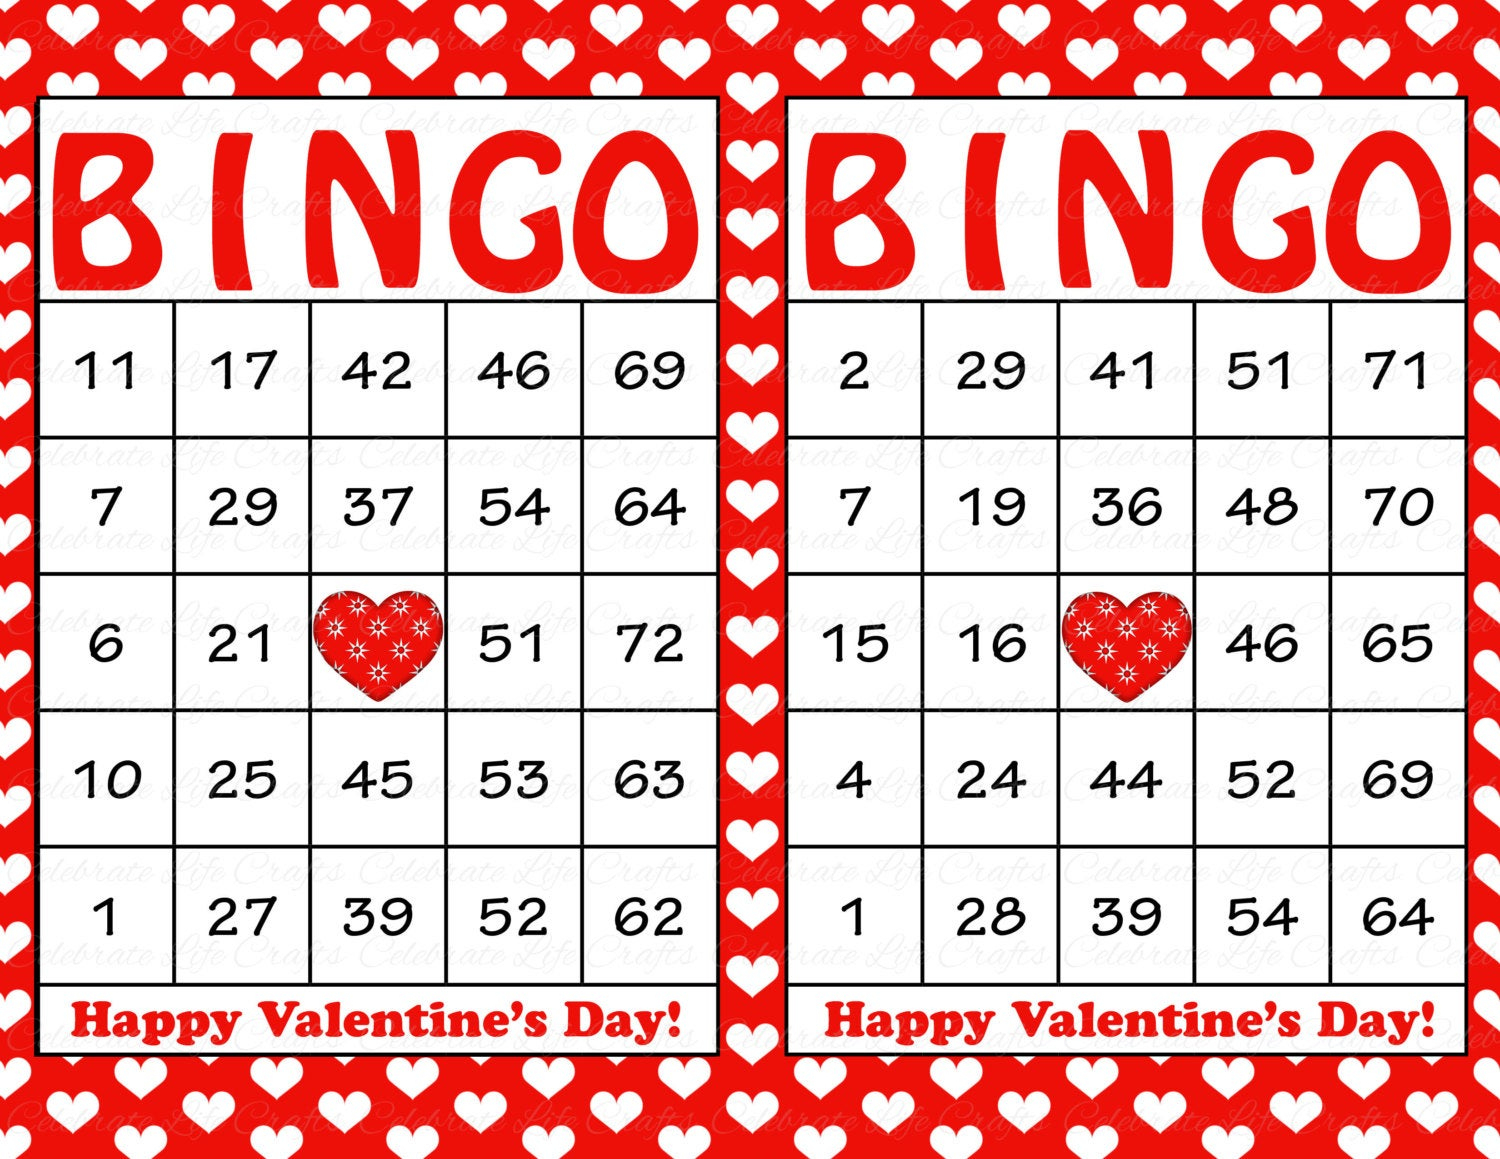 100 Free Printable Bingo Cards 1 75 My Bingo Cards 1.1.0